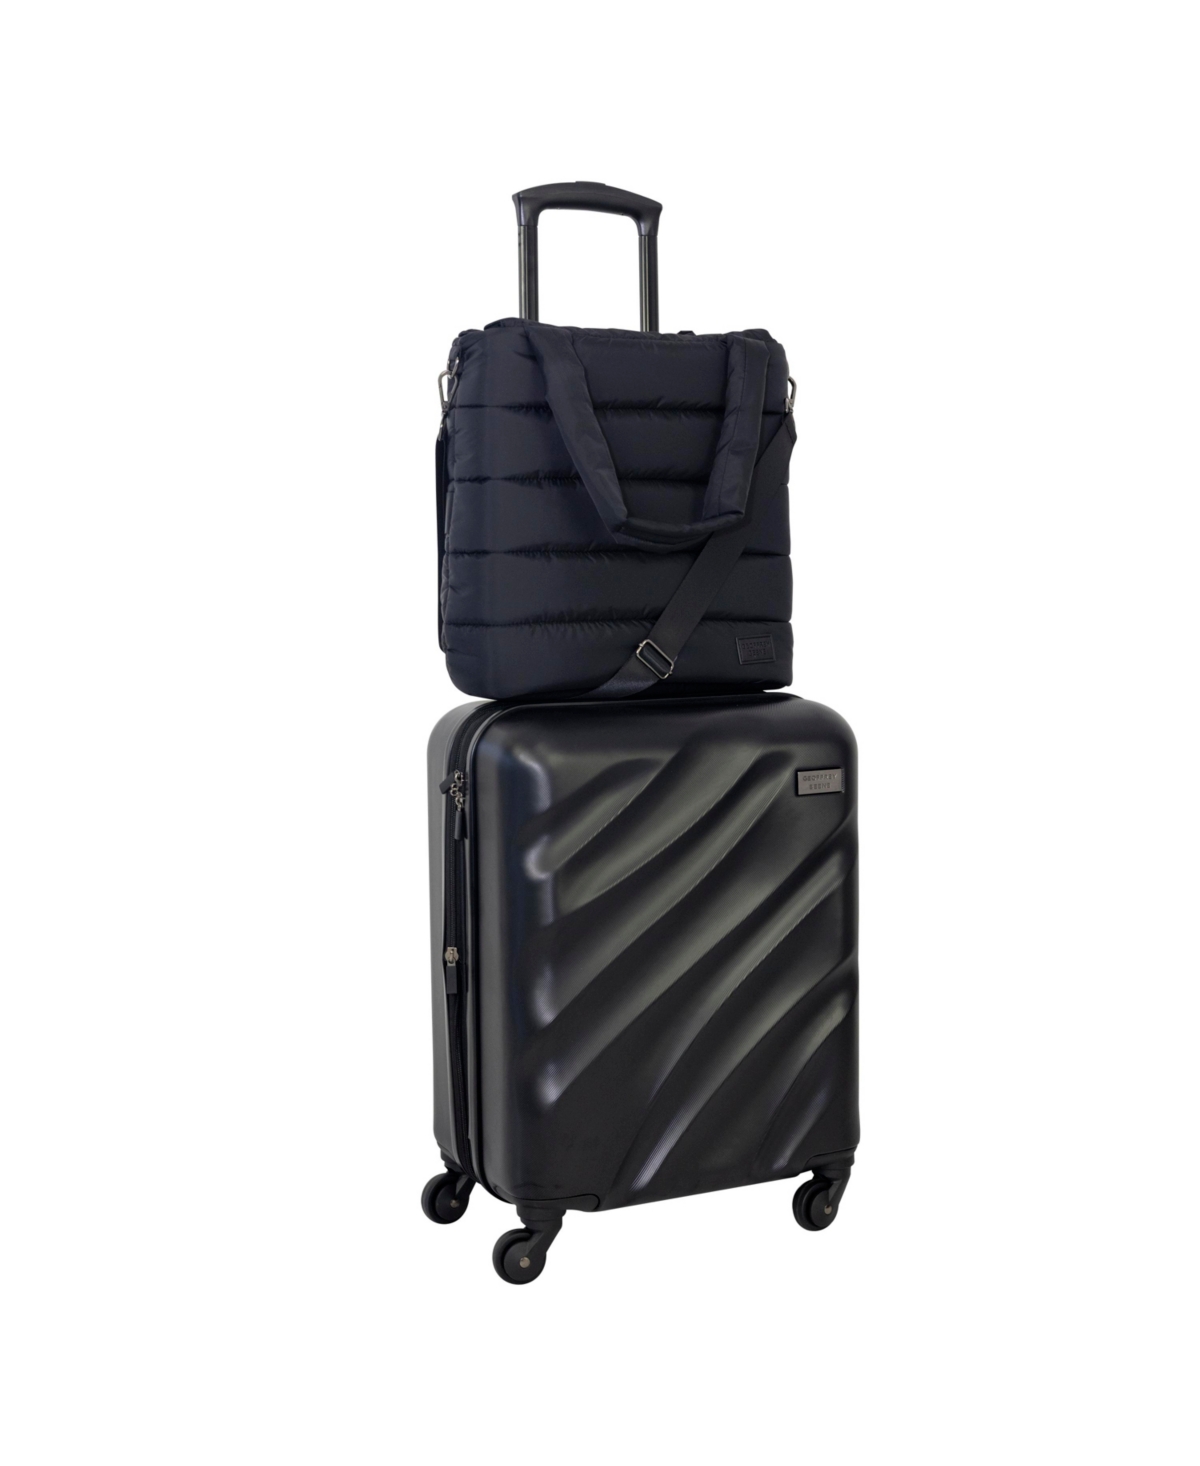 Puffer Hardside Luggage Set, 2 Piece - Black